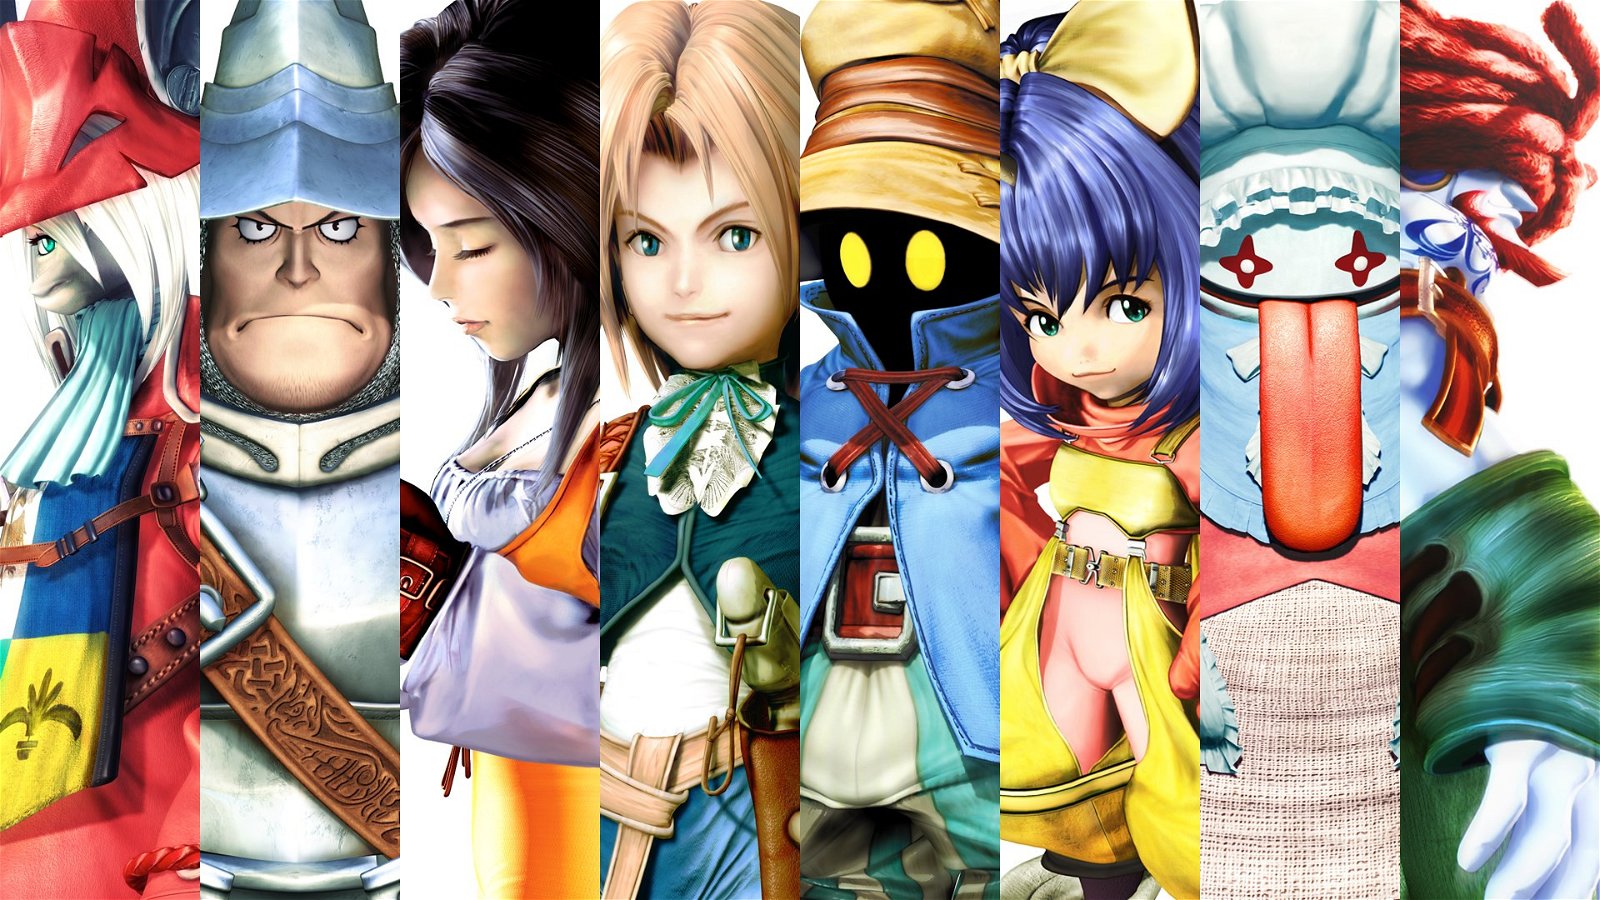 Final Fantasy 9 Remake would be “real”, but not Final Fantasy 10